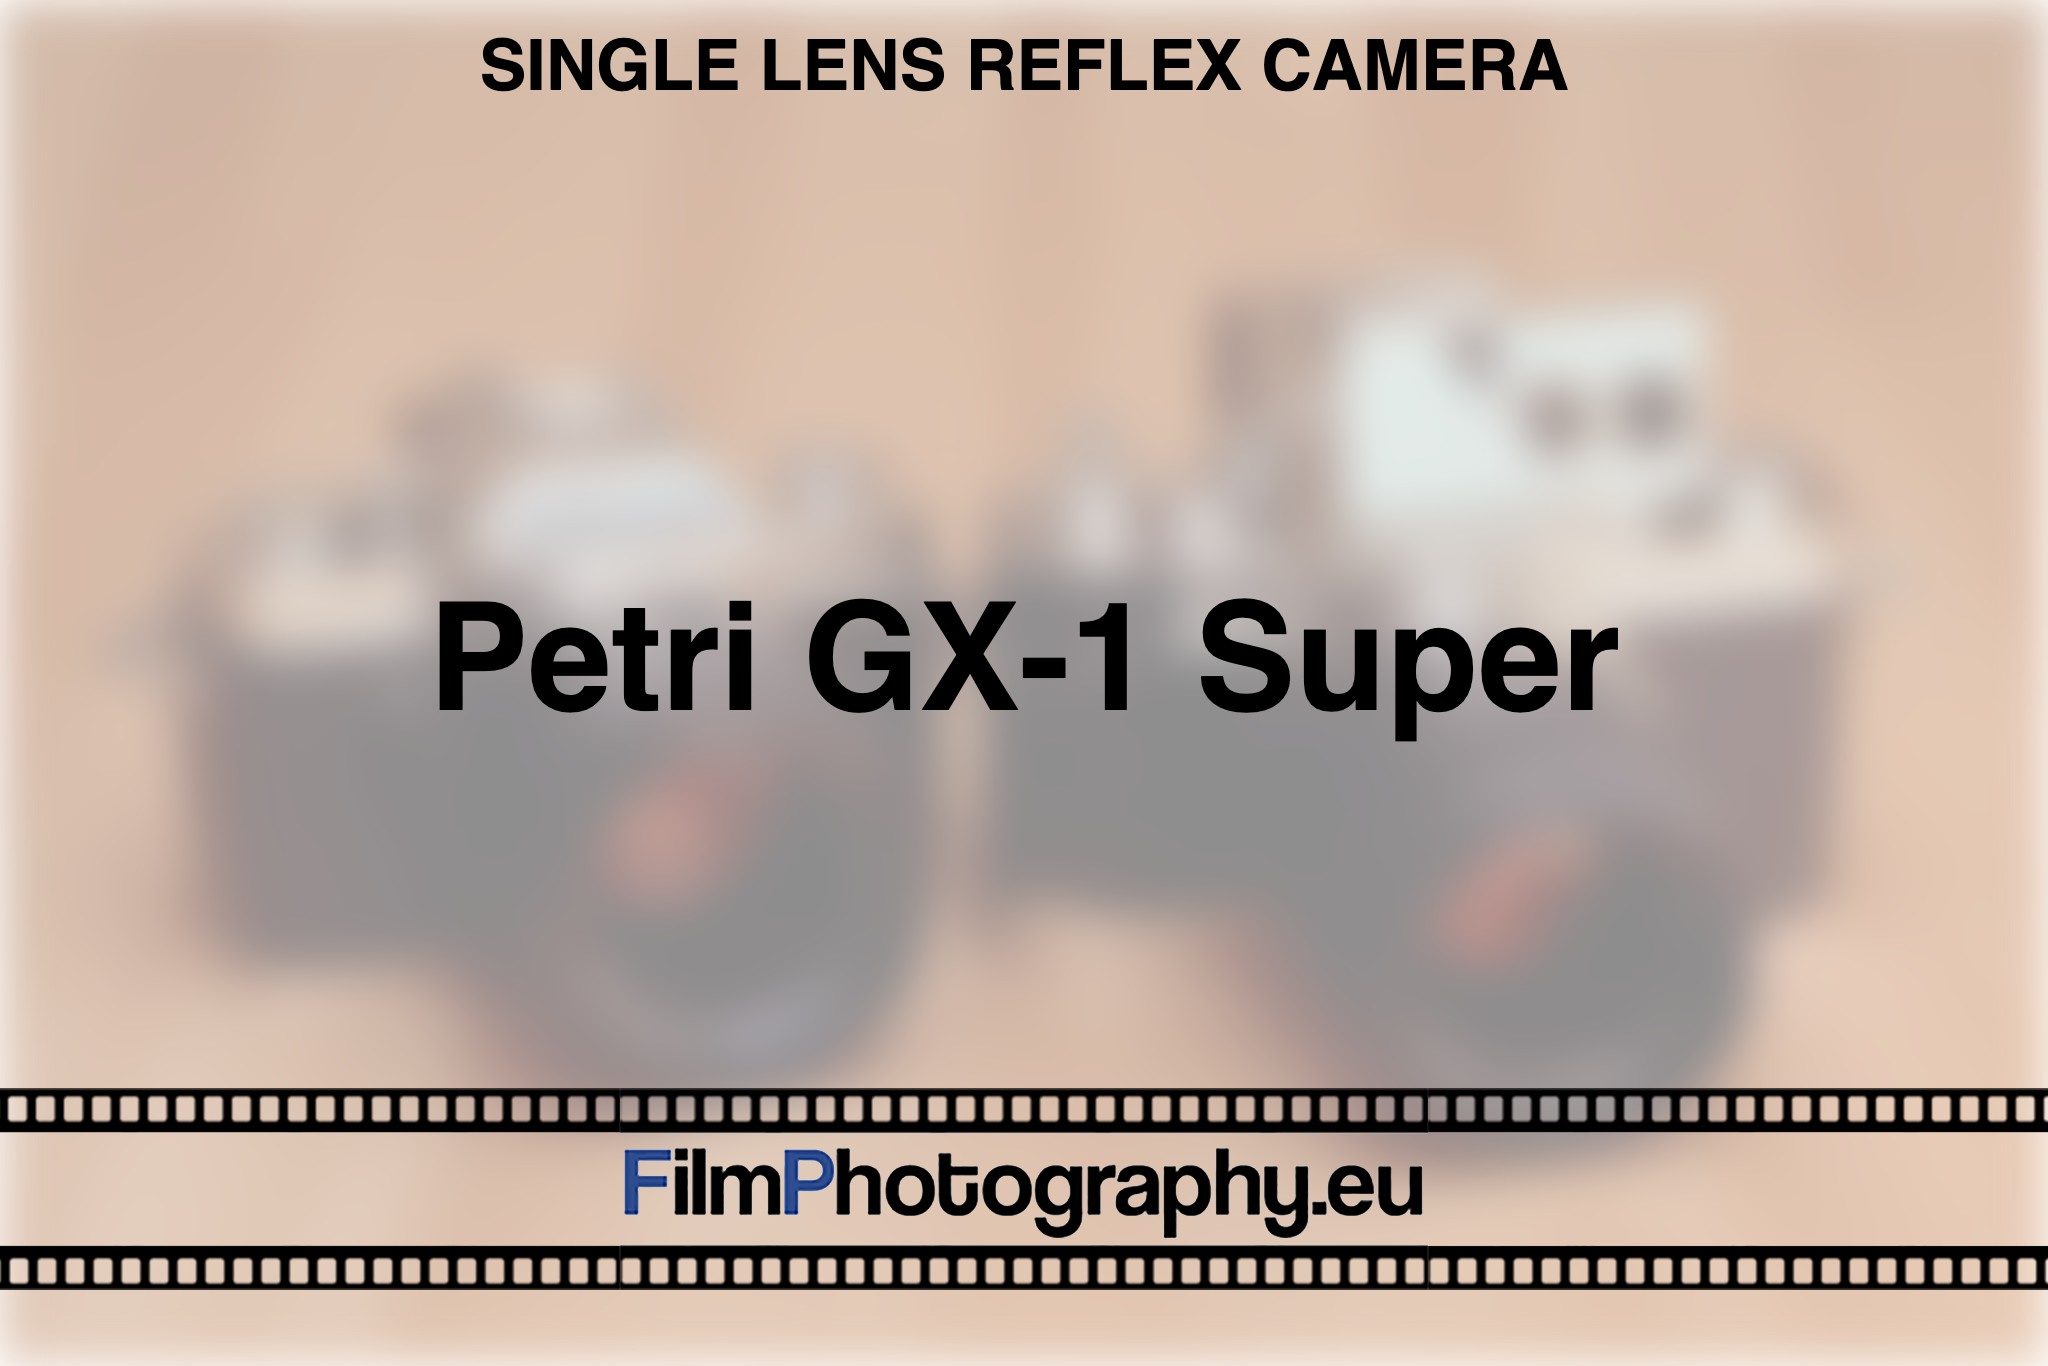 petri-gx-1-super-single-lens-reflex-camera-bnv